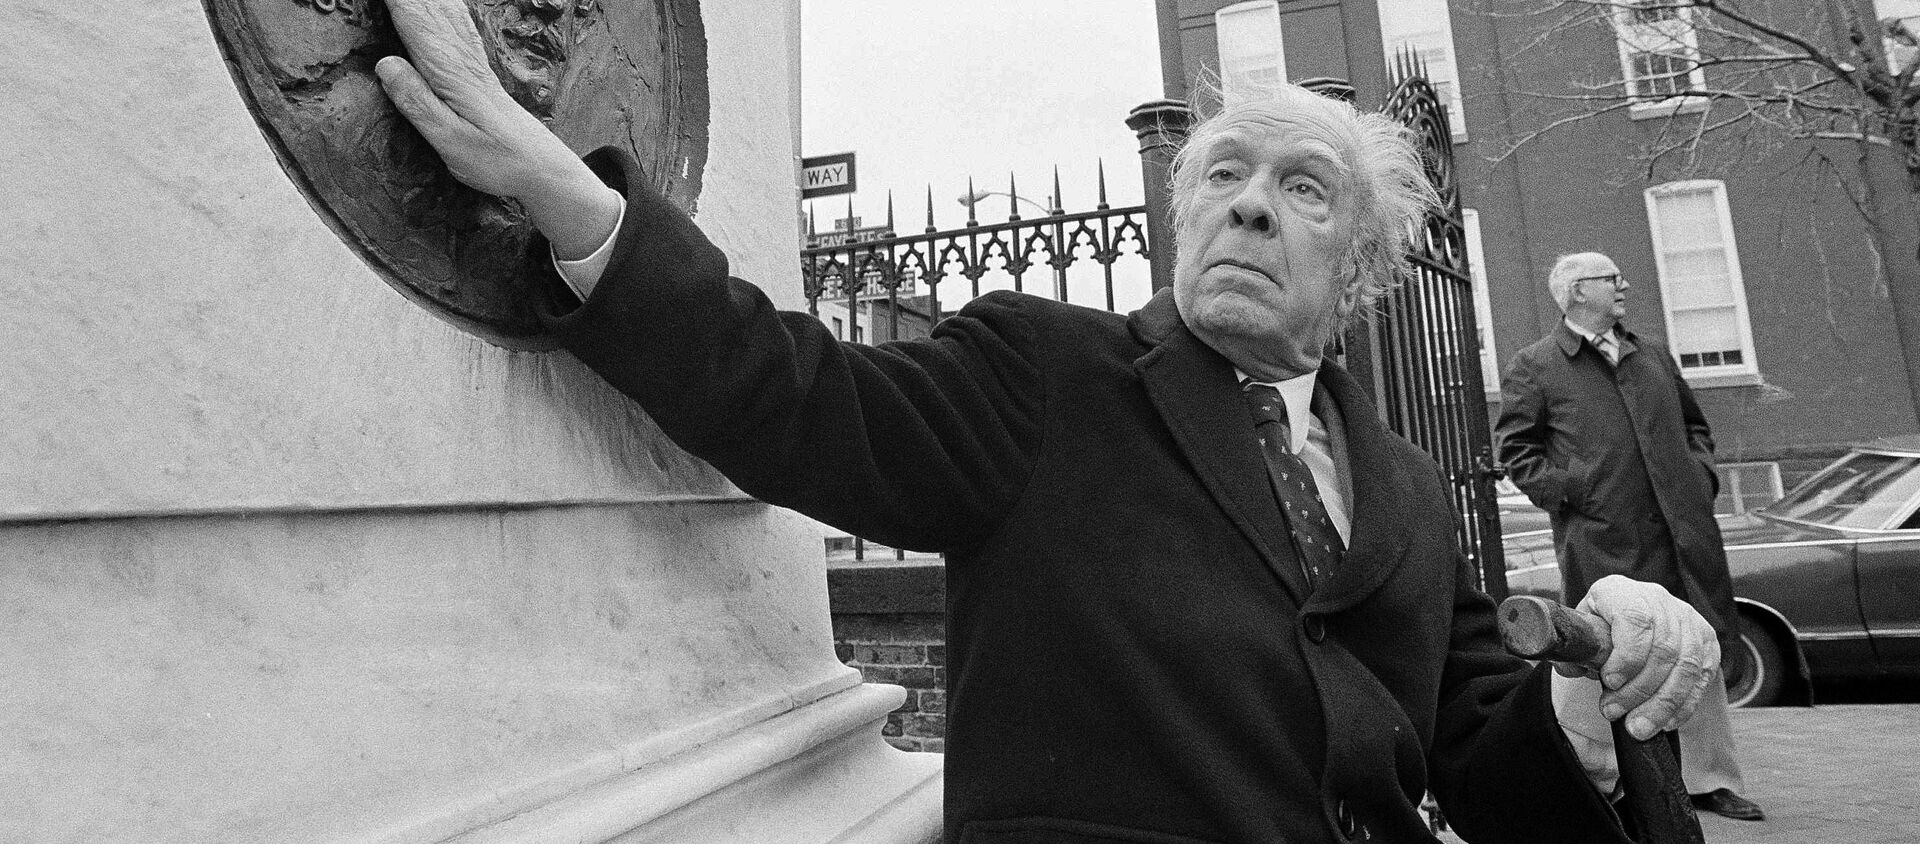 Jorge Luis Borges, el escritor argentino - Sputnik Mundo, 1920, 05.09.2019